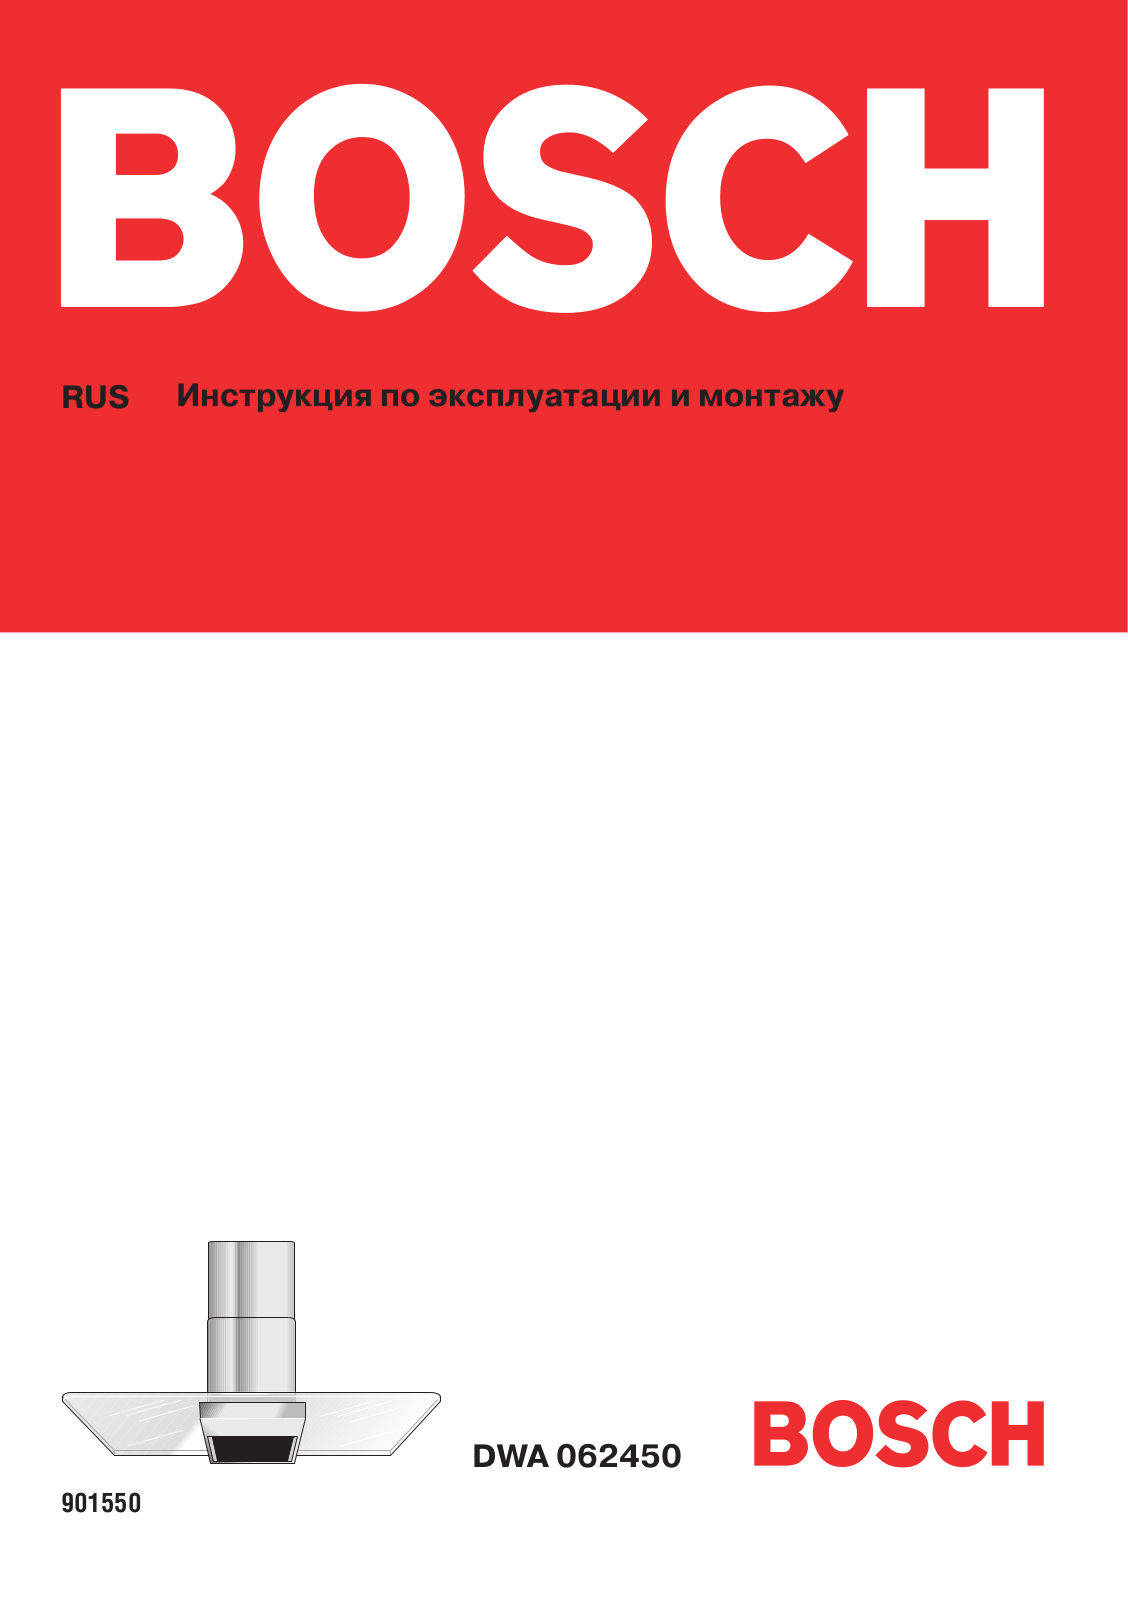 Bosch DWA 062450 User Manual